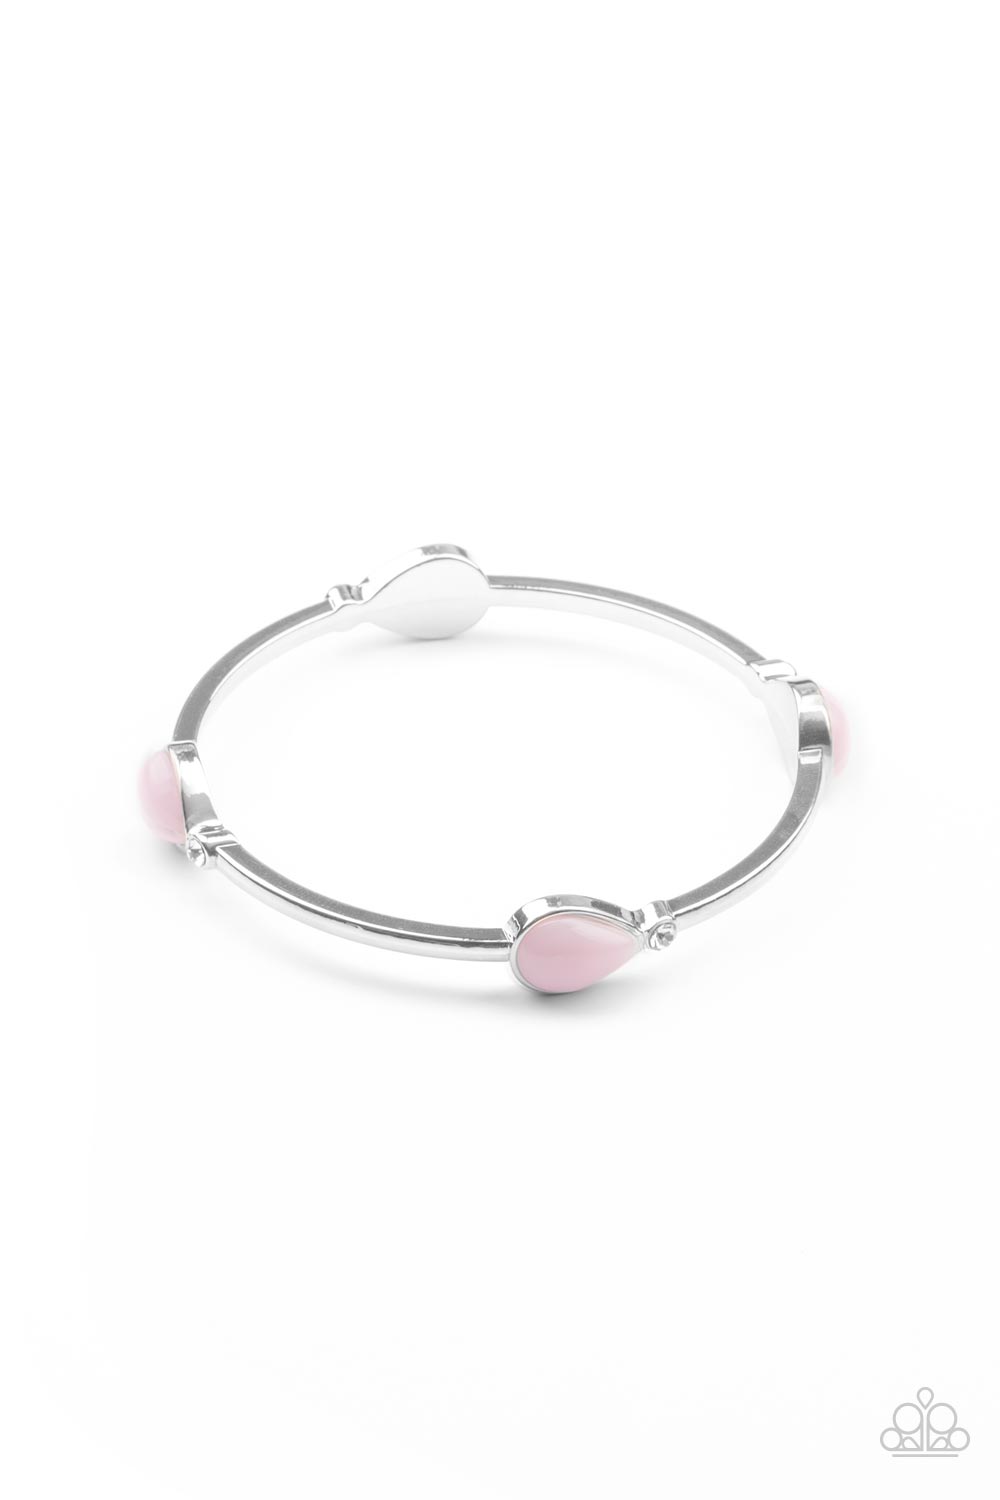 Dewdrop Dancing - pink - Paparazzi bracelet